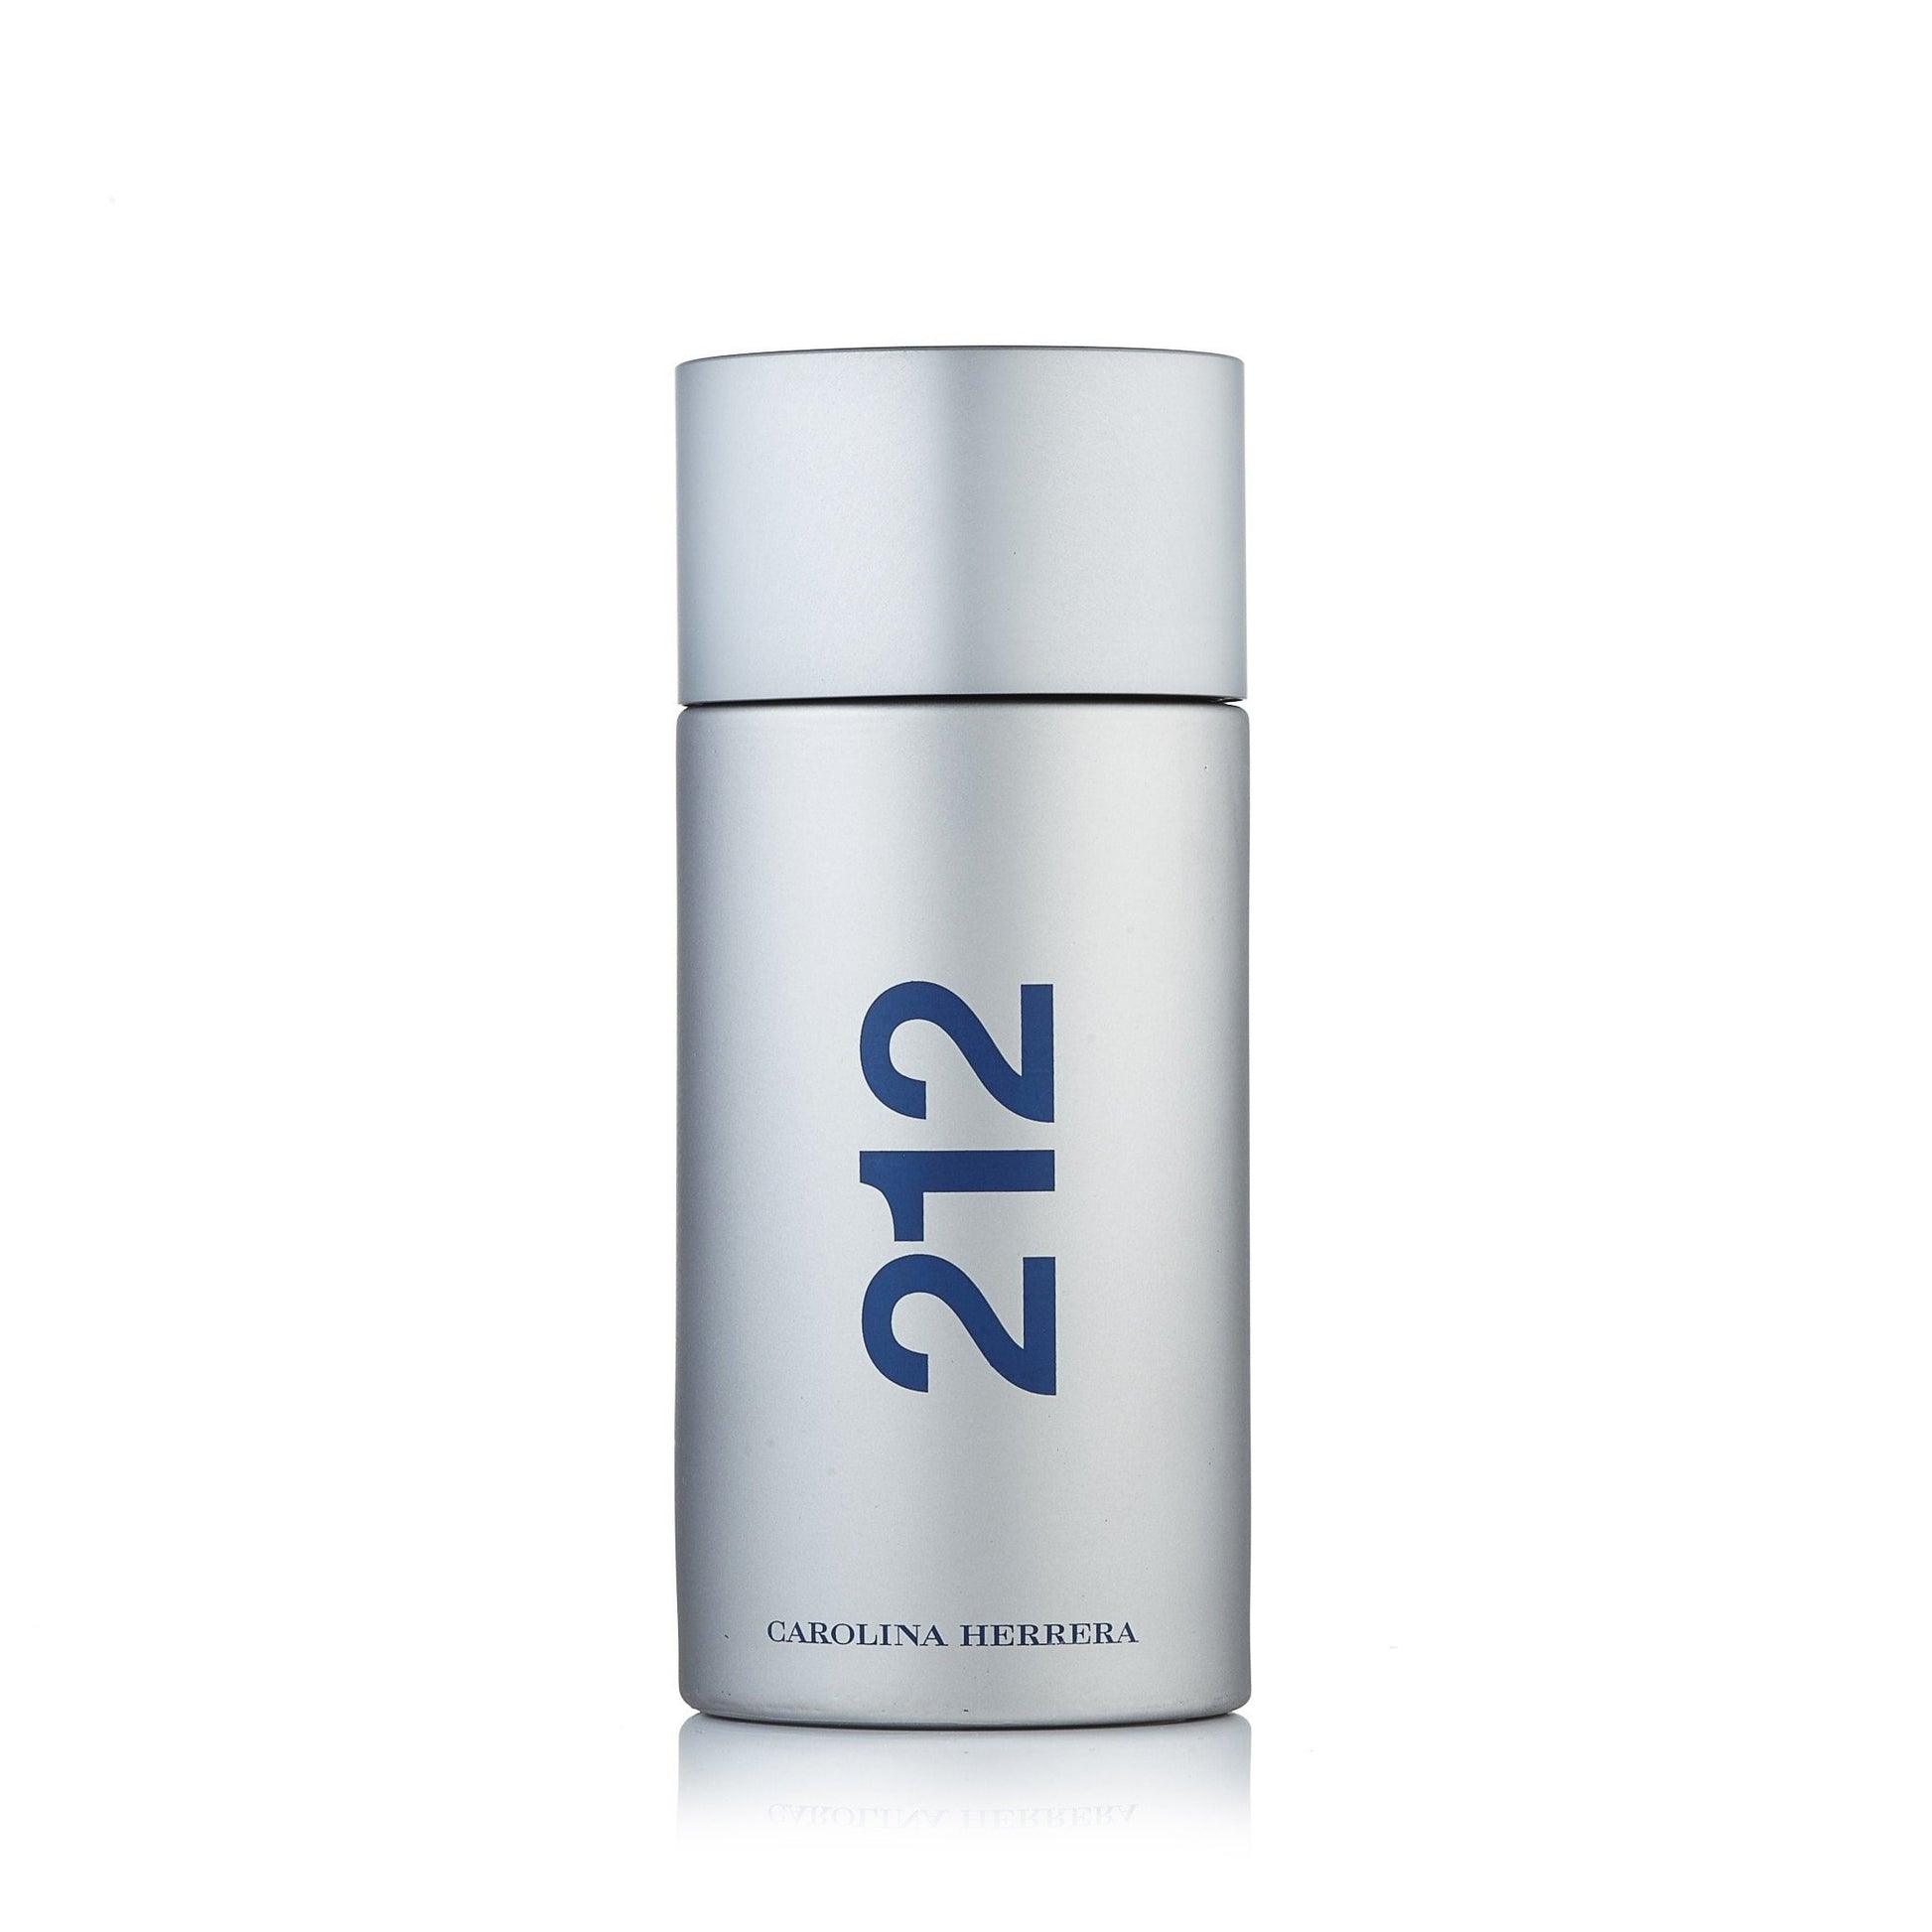 212 Men Eau de Toilette Spray for Men by Carolina Herrera, Product image 2